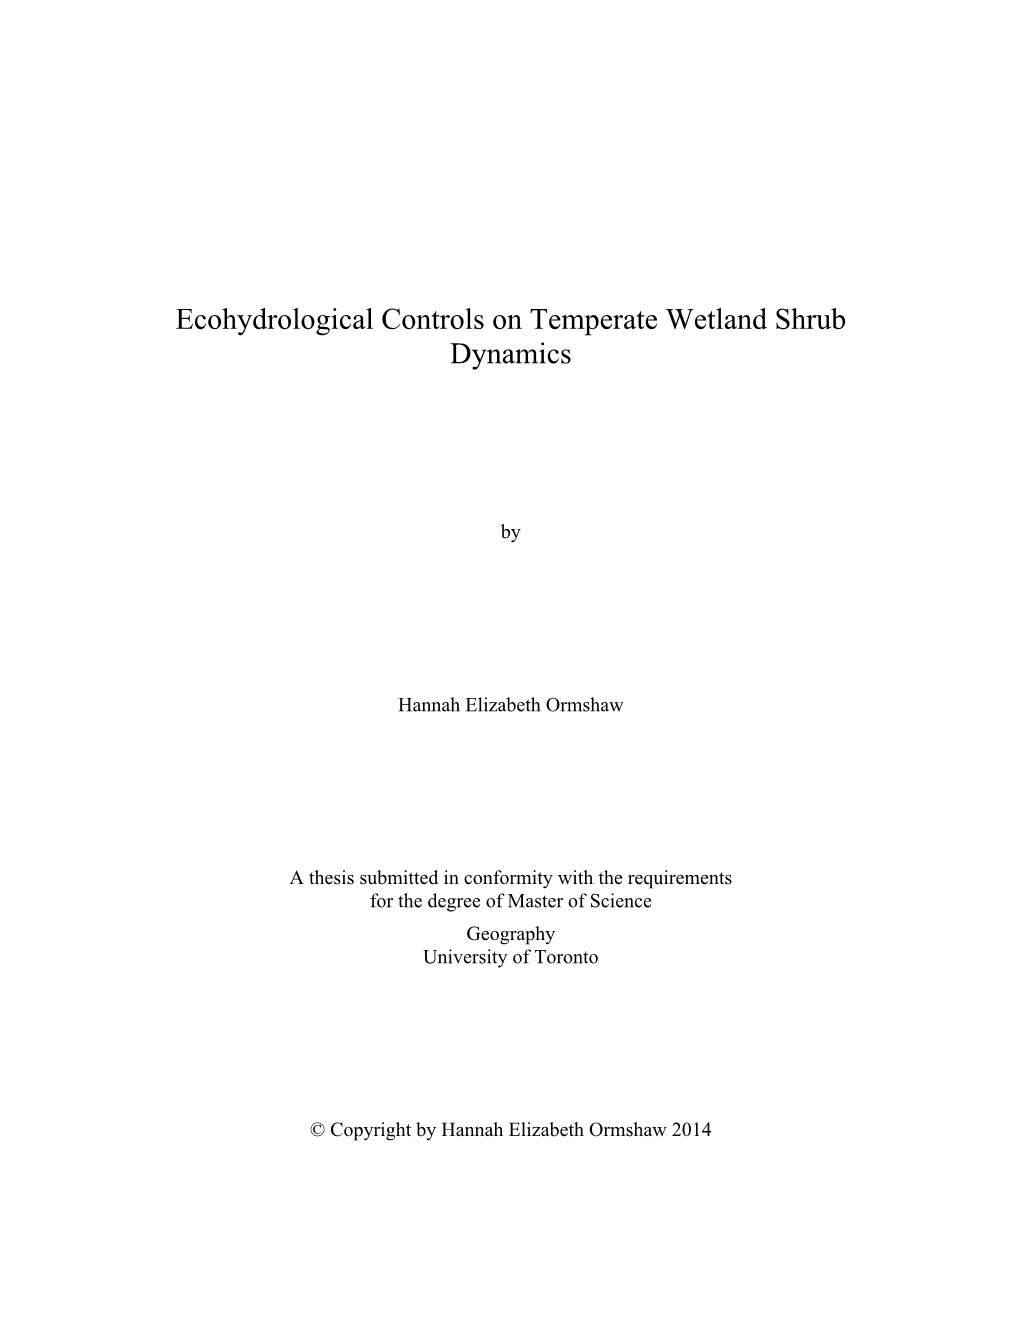 Ecohydrological Controls on Temperate Wetland Shrub Dynamics